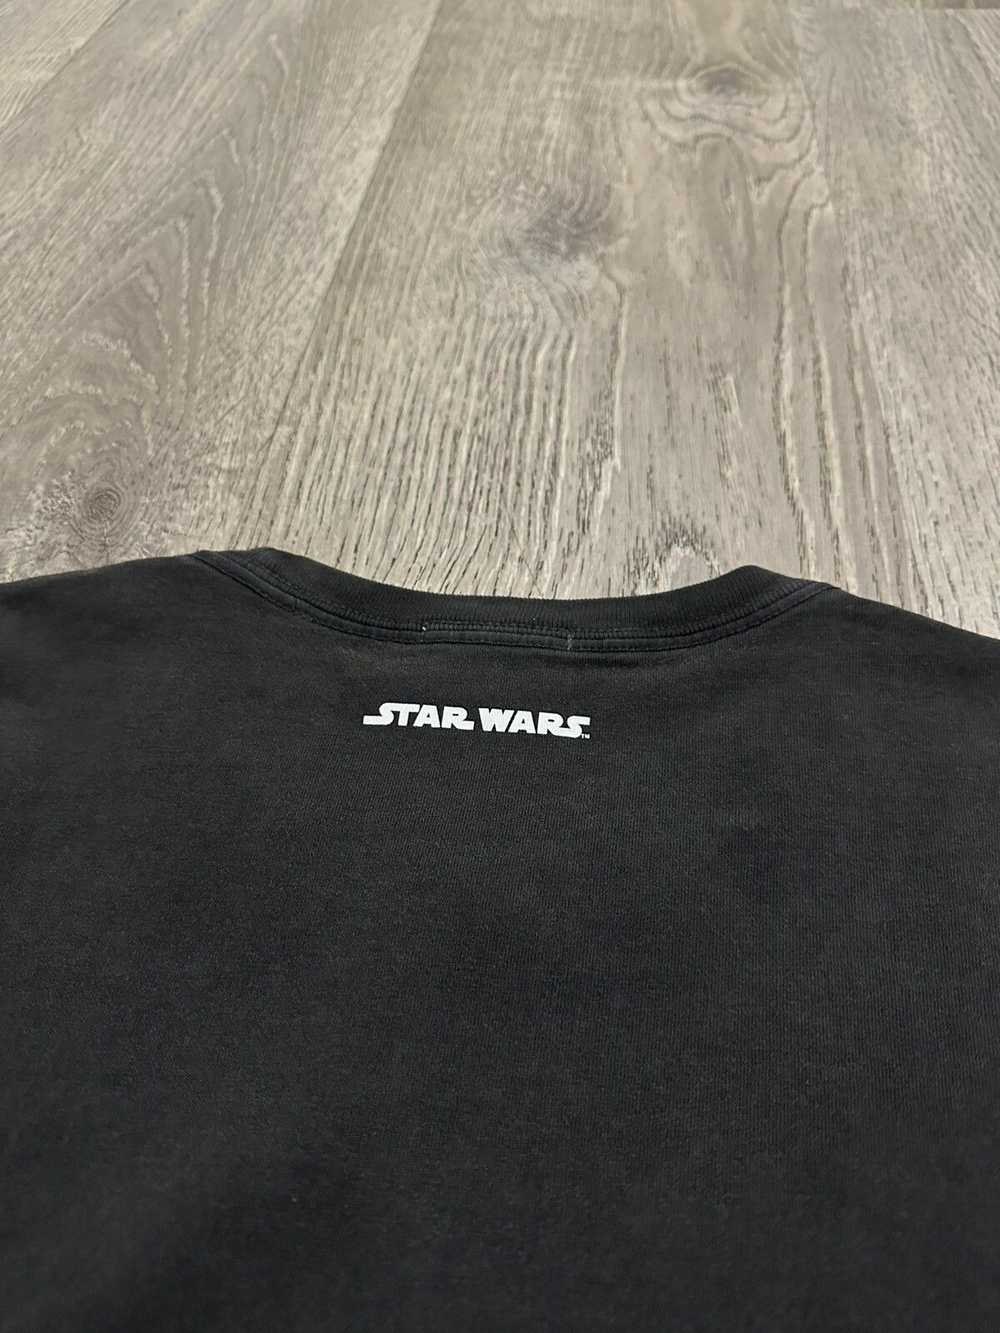 Kith Kith Star Wars Vintage T Shirt - image 4